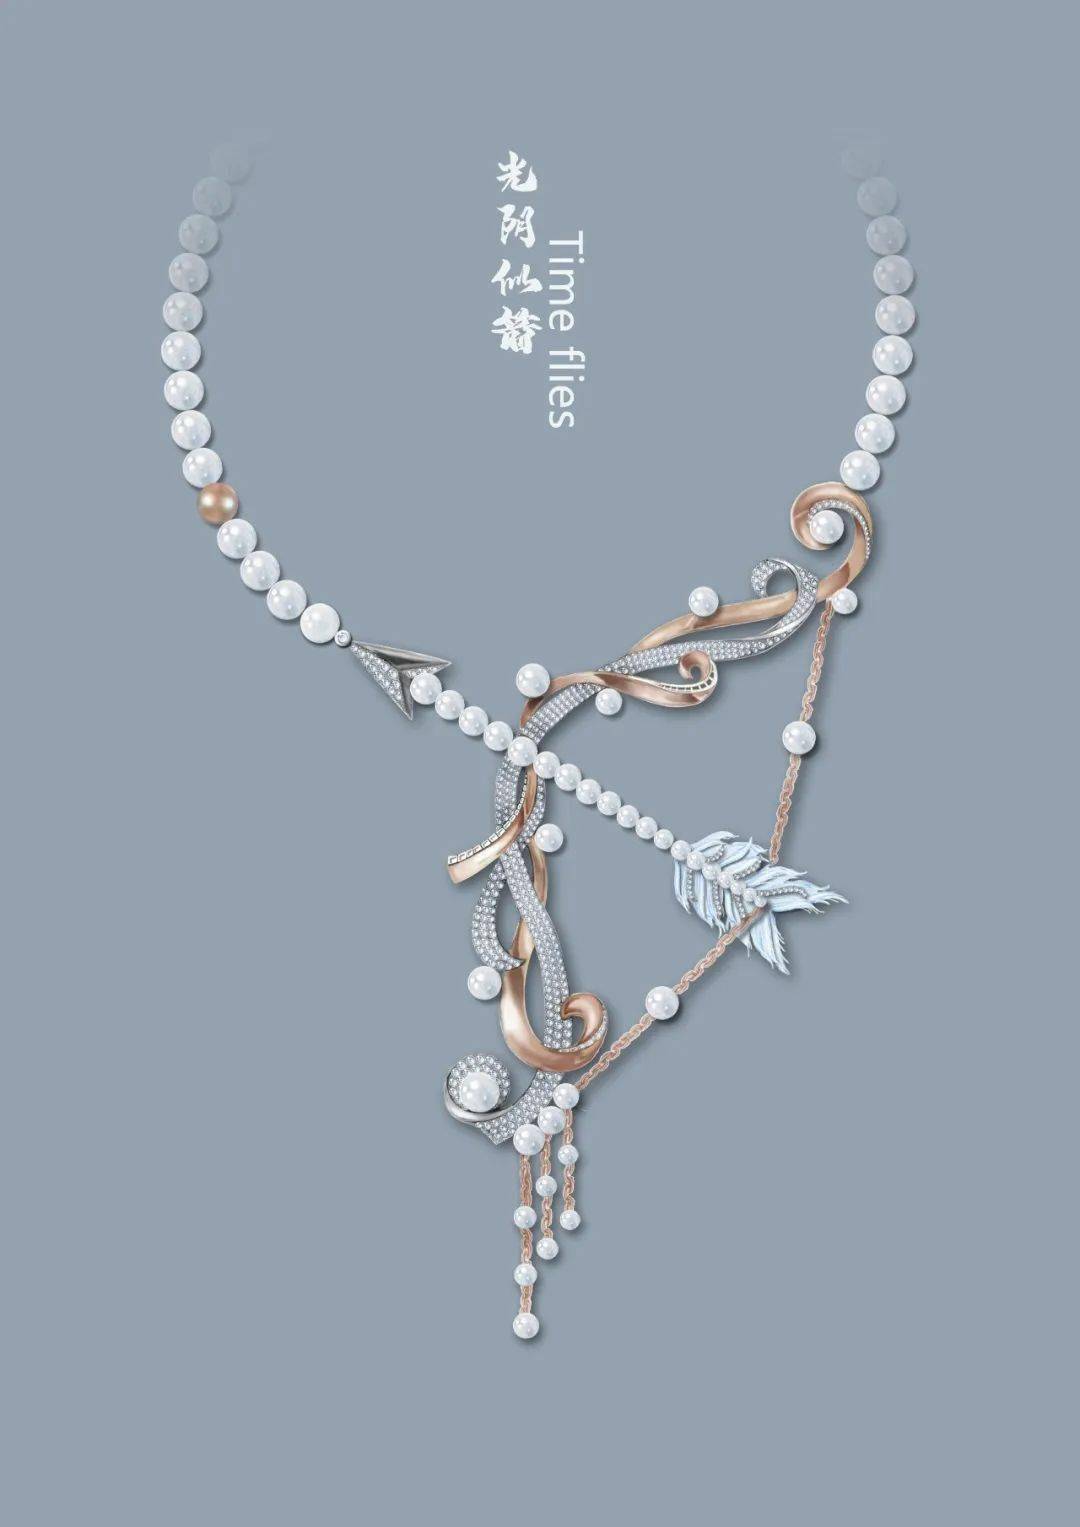 2019-iai珠宝(珍珠)设计创意奖作品赏析